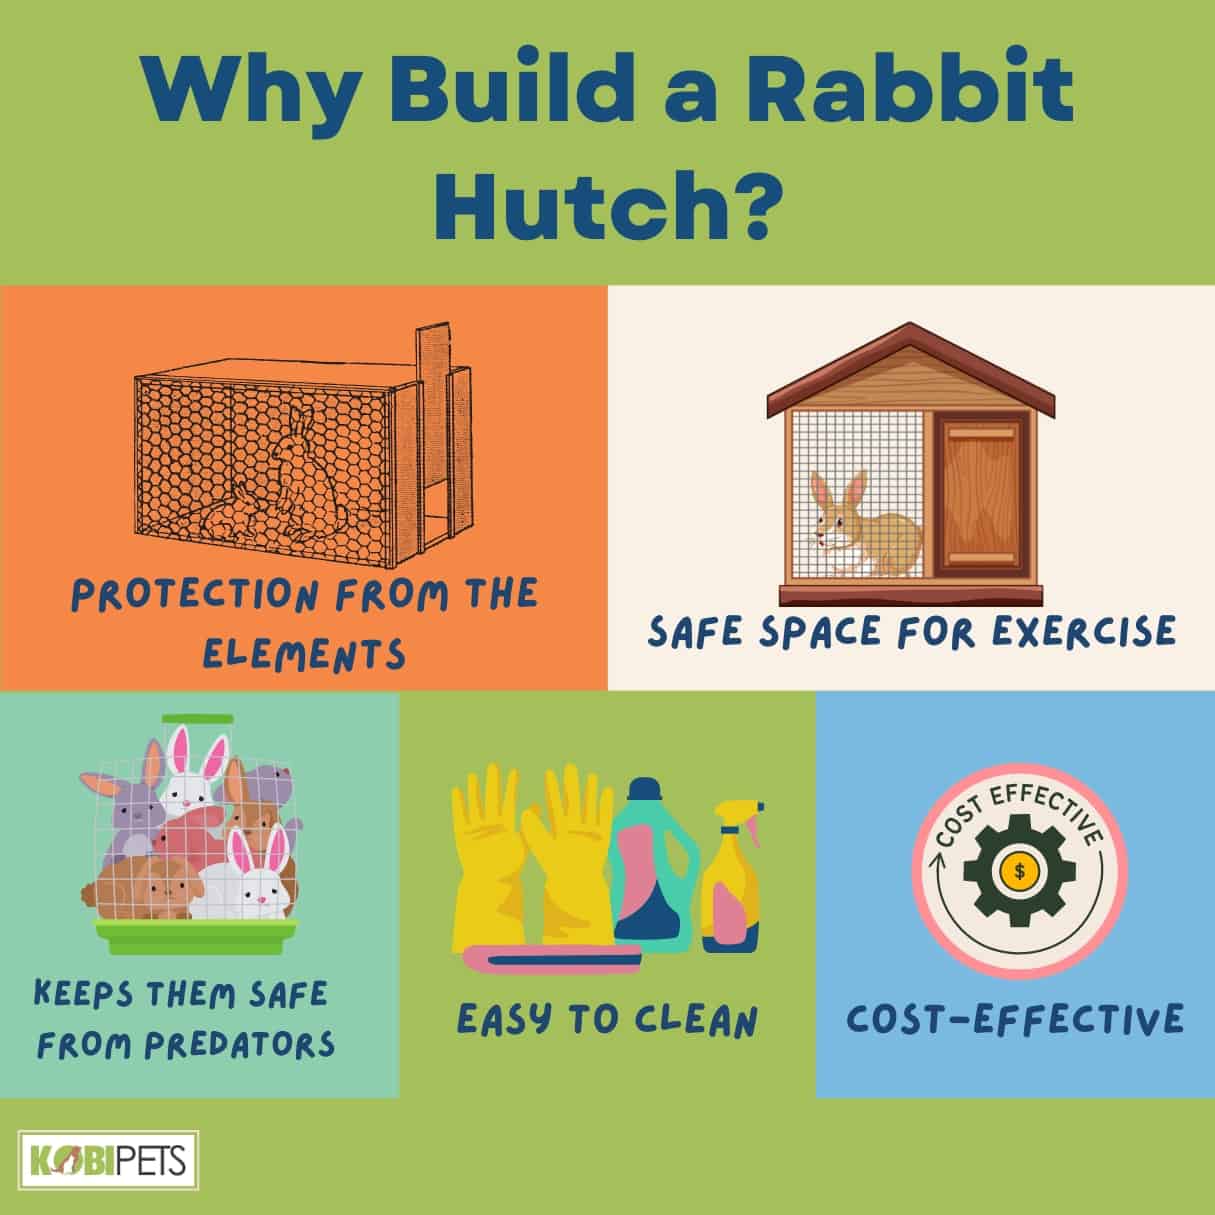 Why Build a Rabbit Hutch